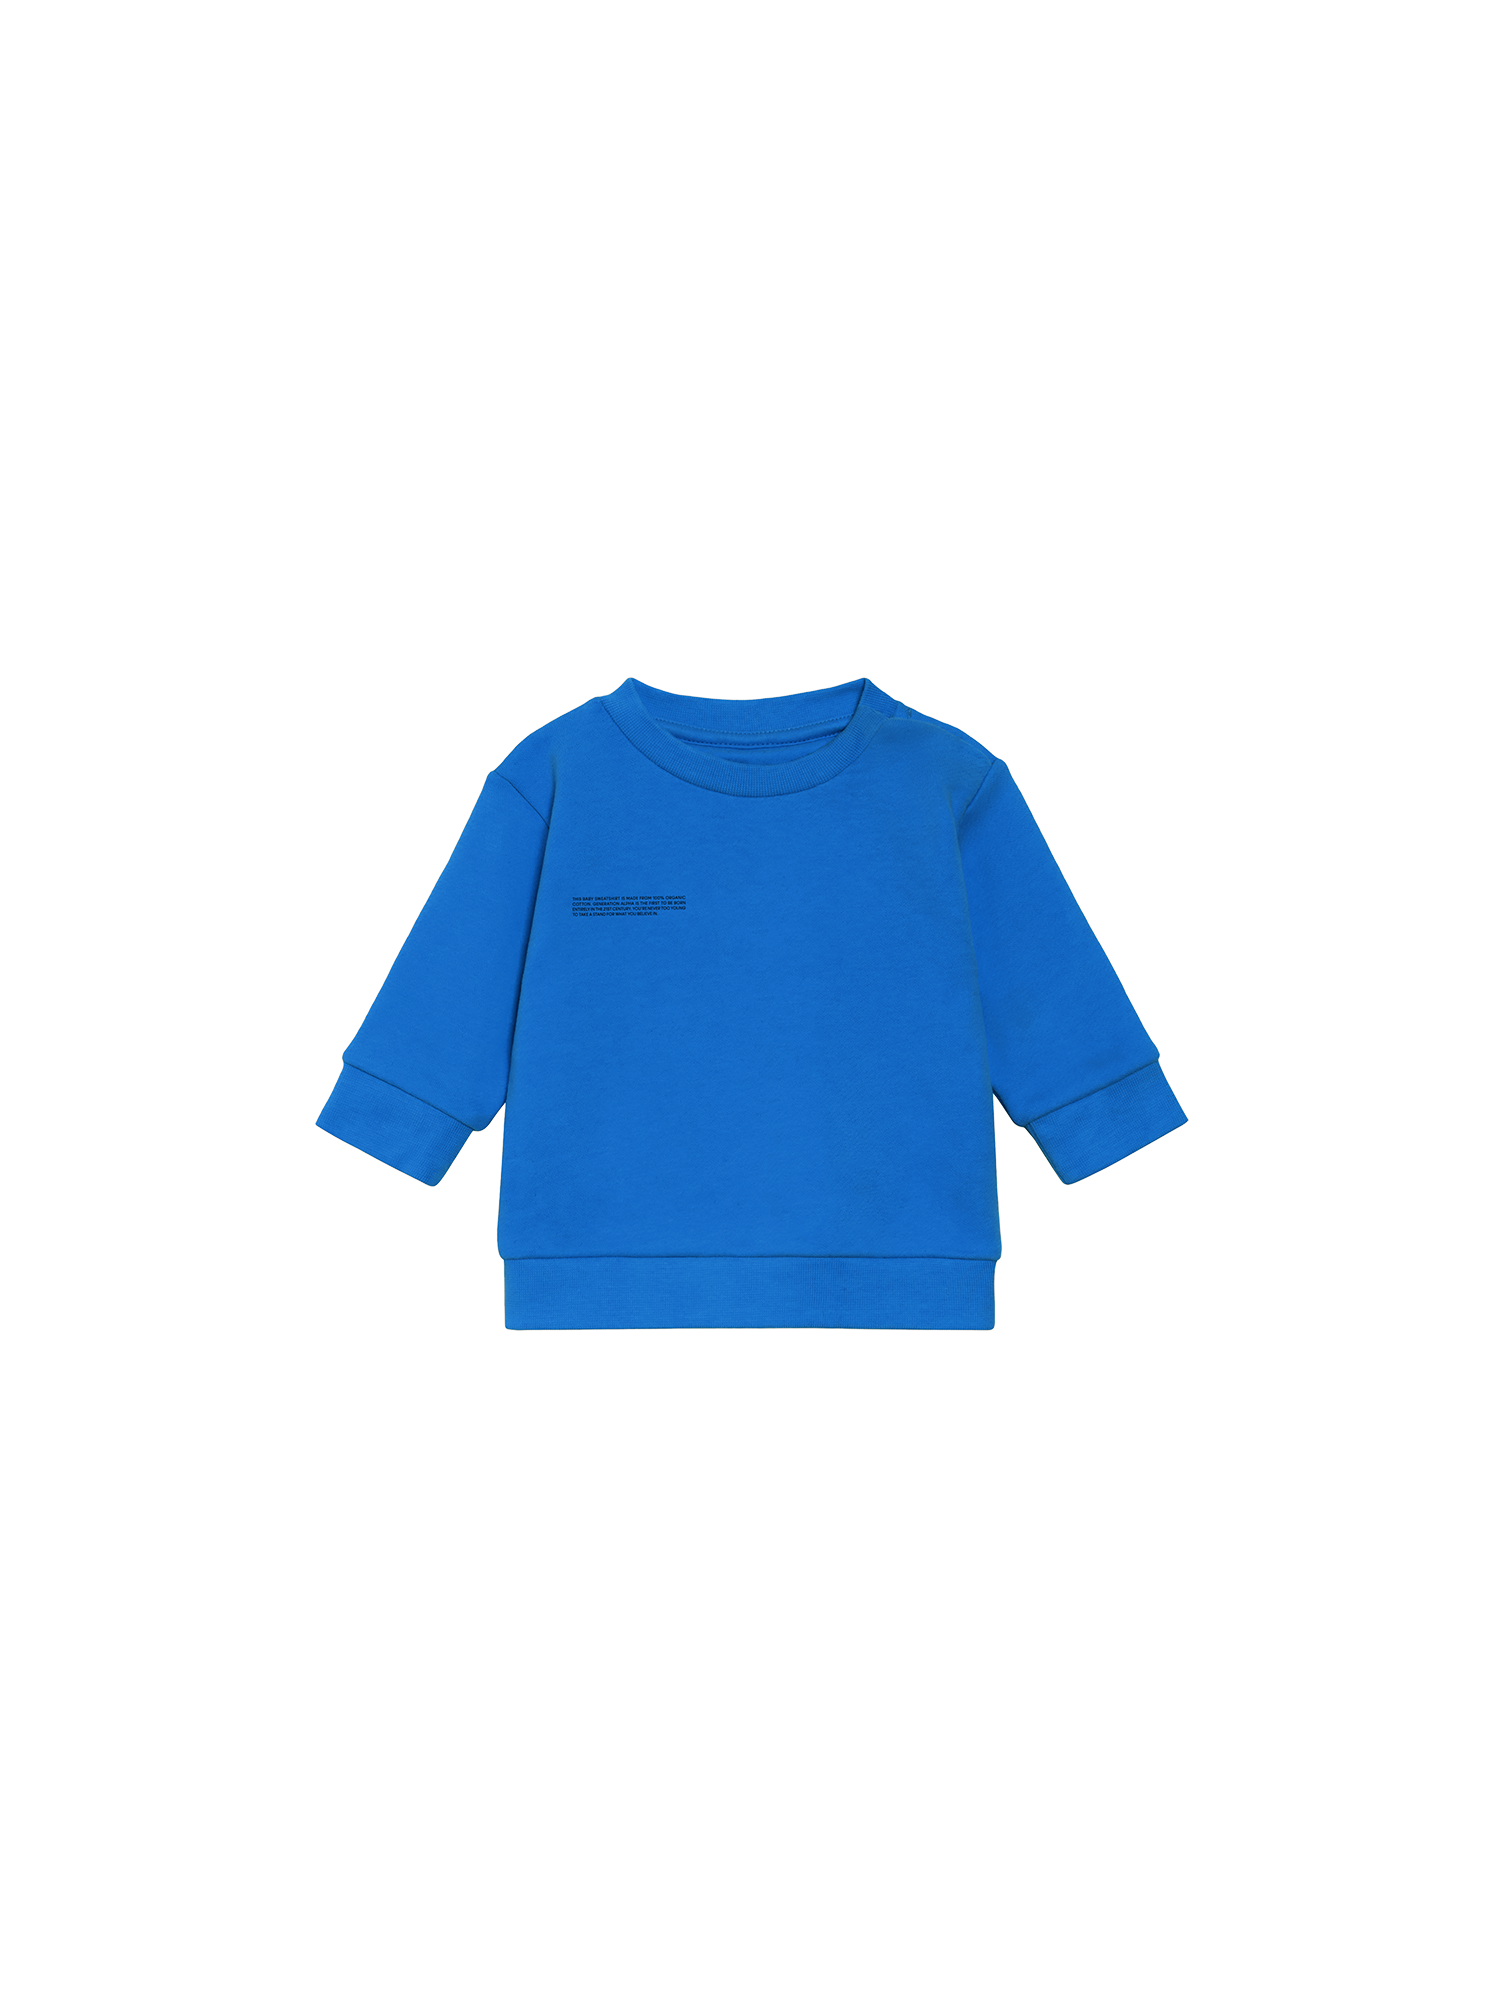 365 Baby Sweatshirt—cobalt blue packshot-3